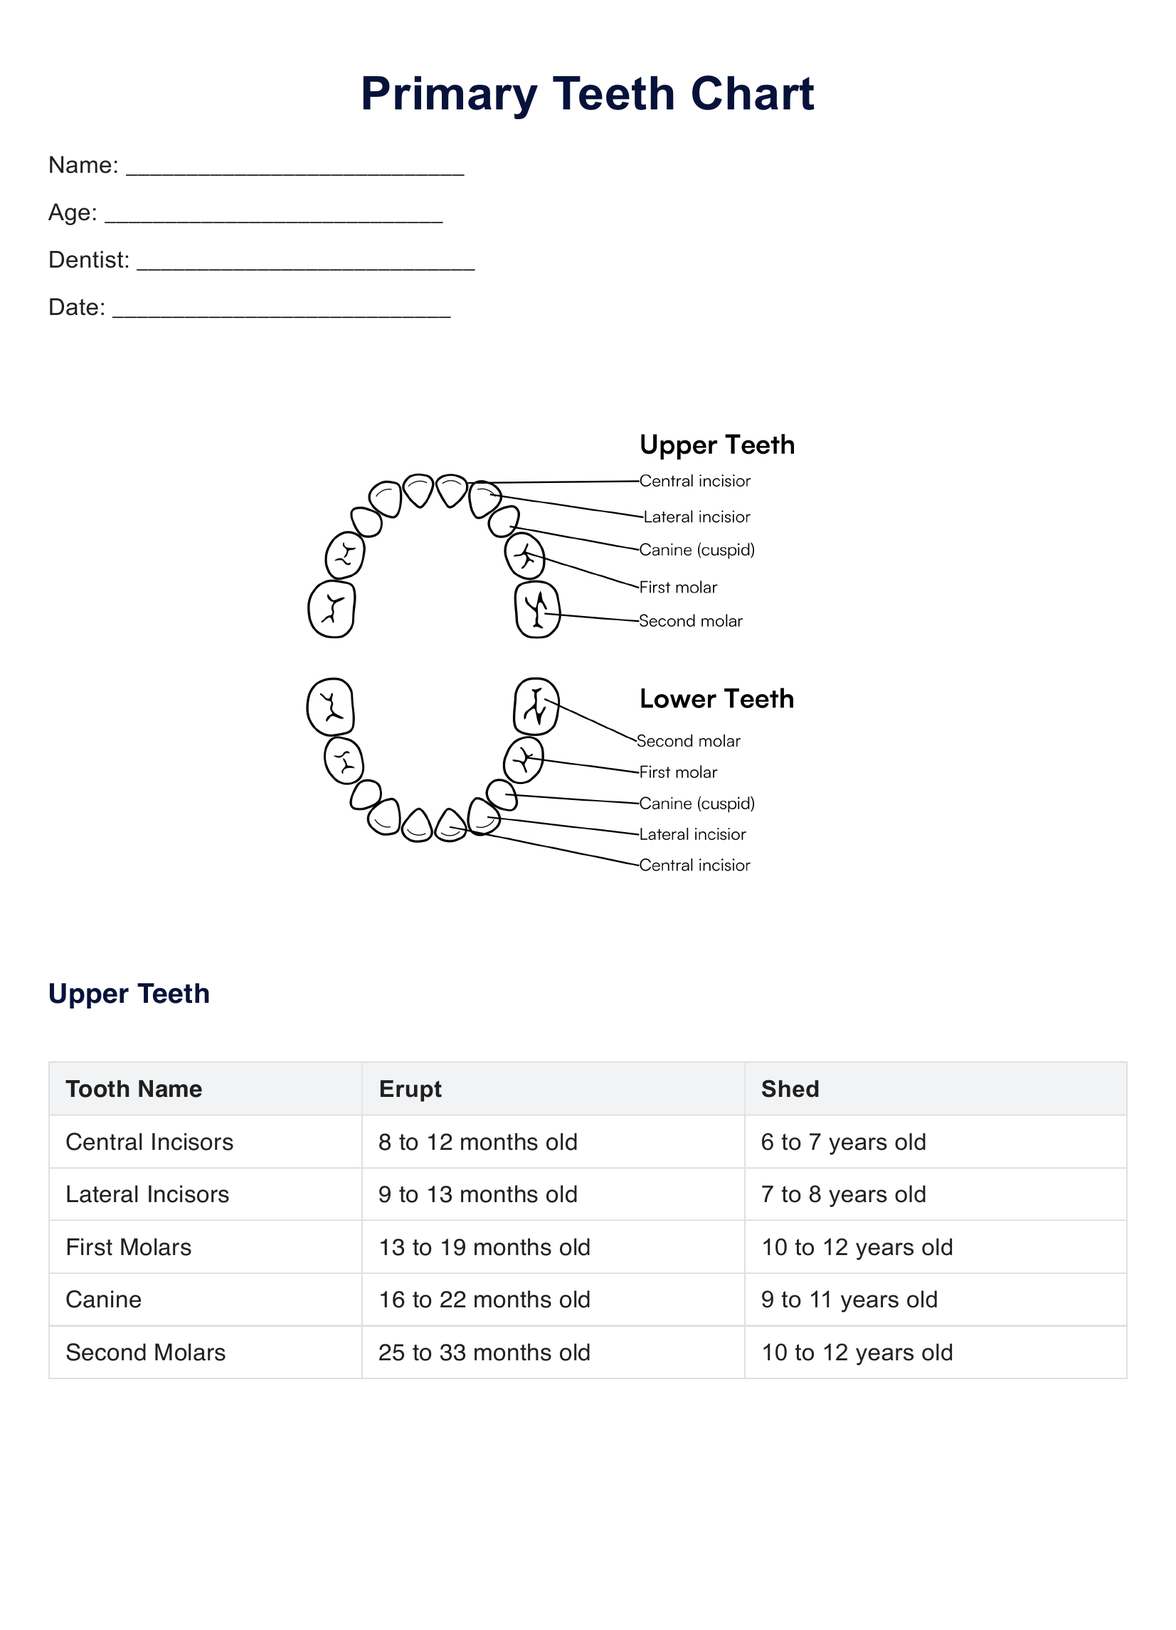 Primary Teeth PDF Example